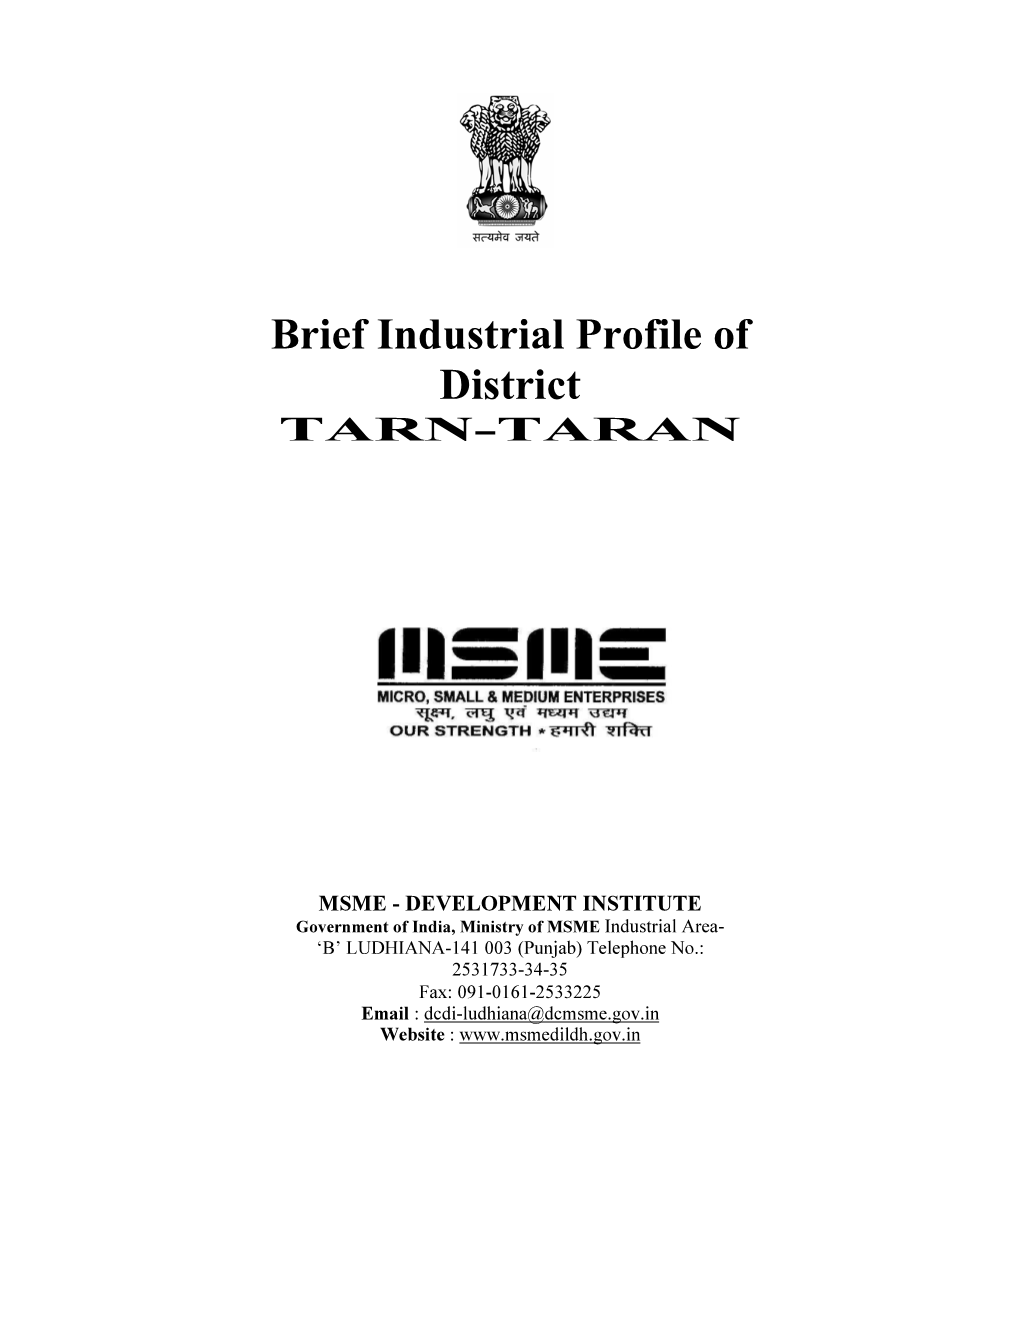 Brief Industrial Profile of District TARN-TARAN